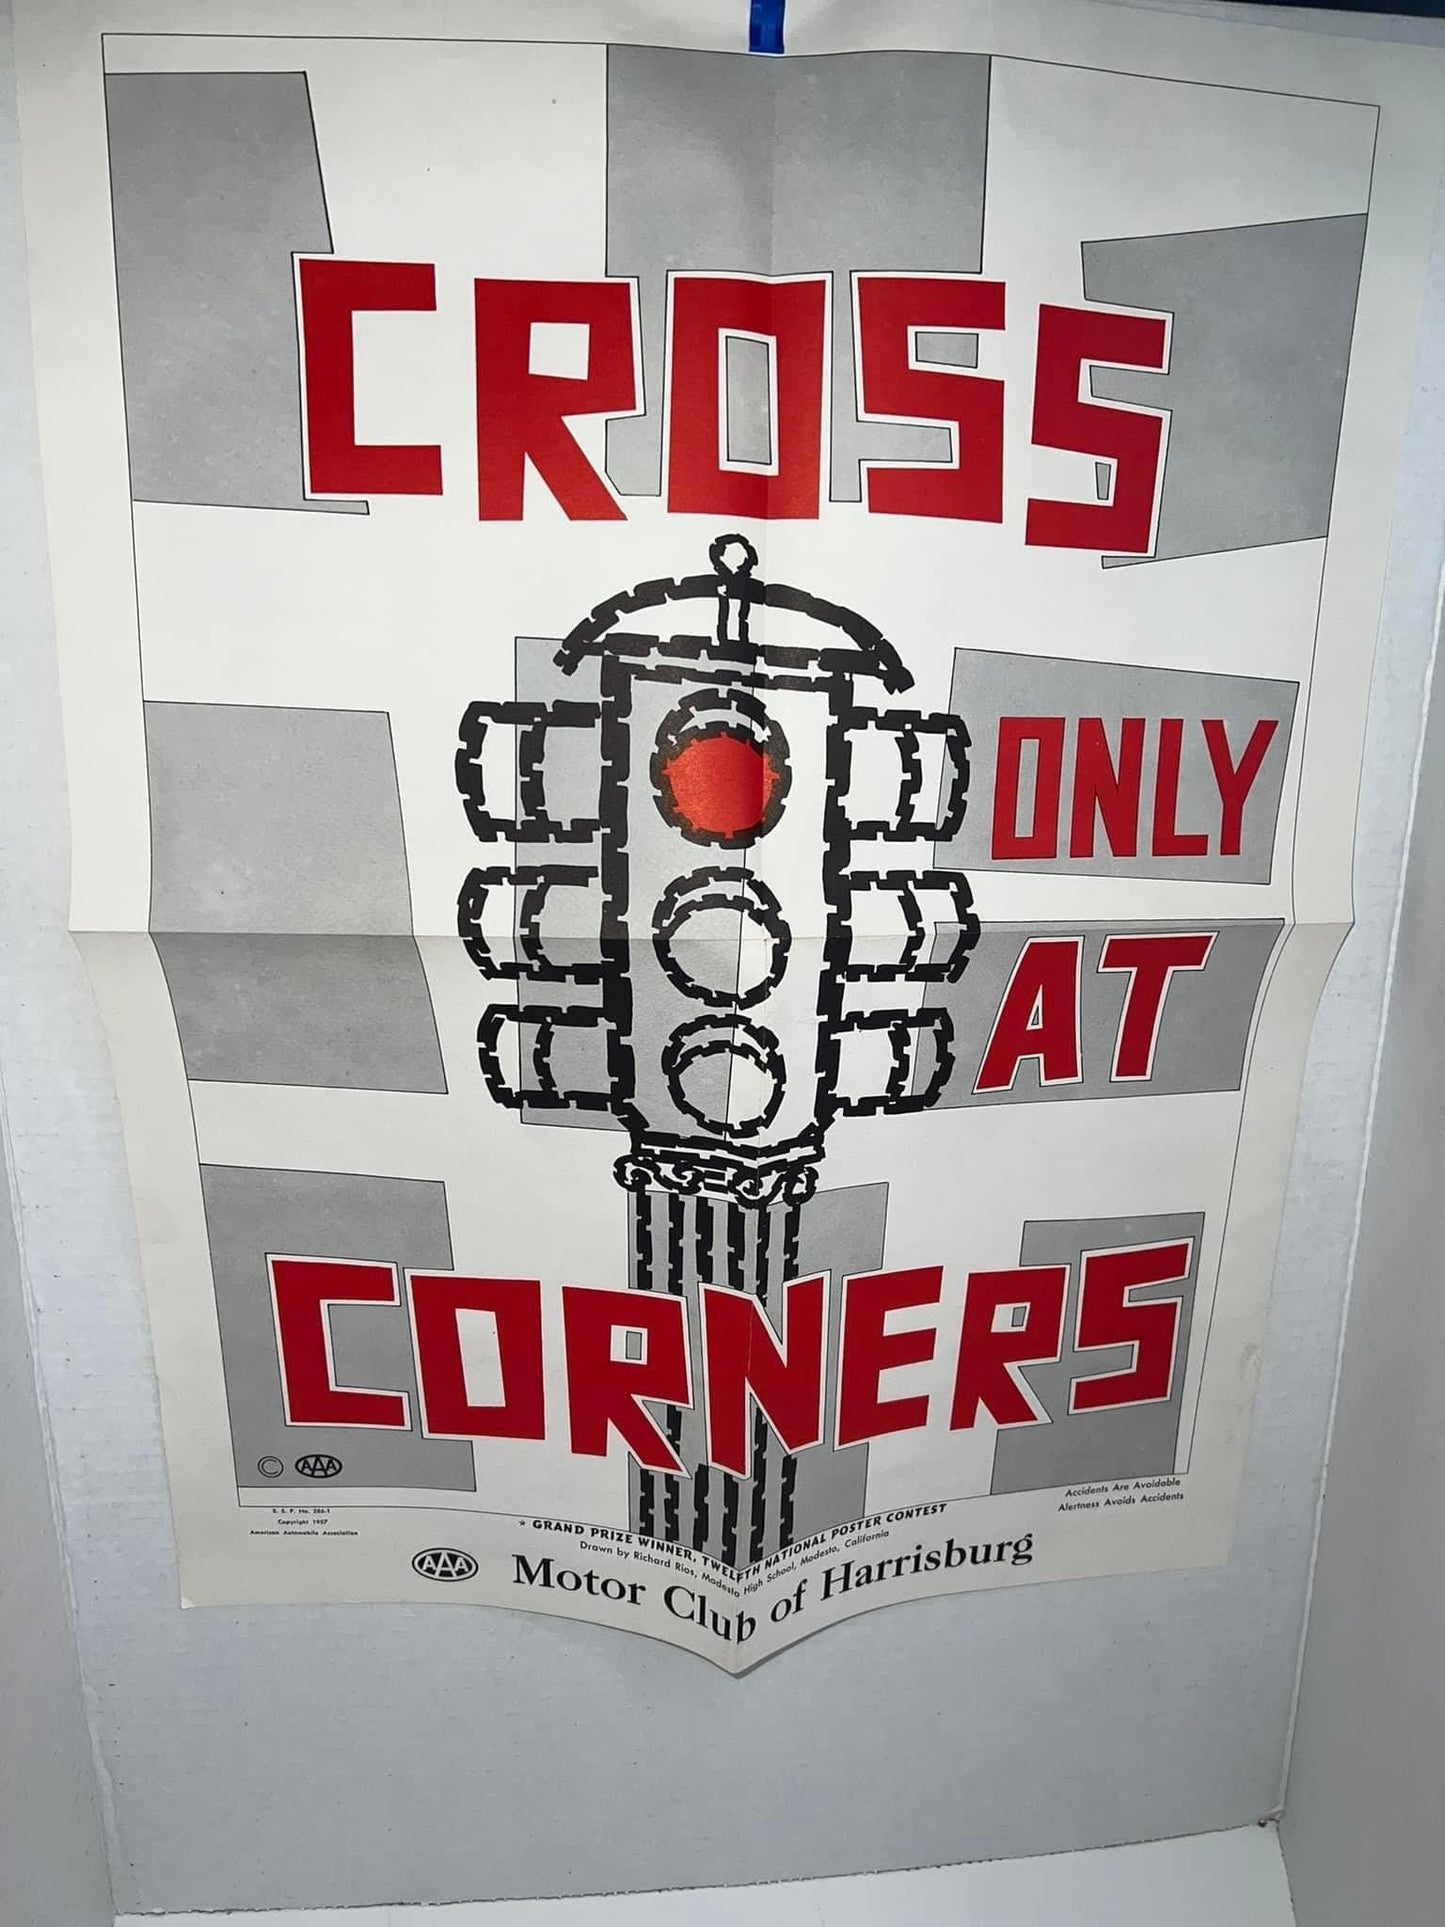 Vintage transportation 1957 AAA poster Cross only at cross walks